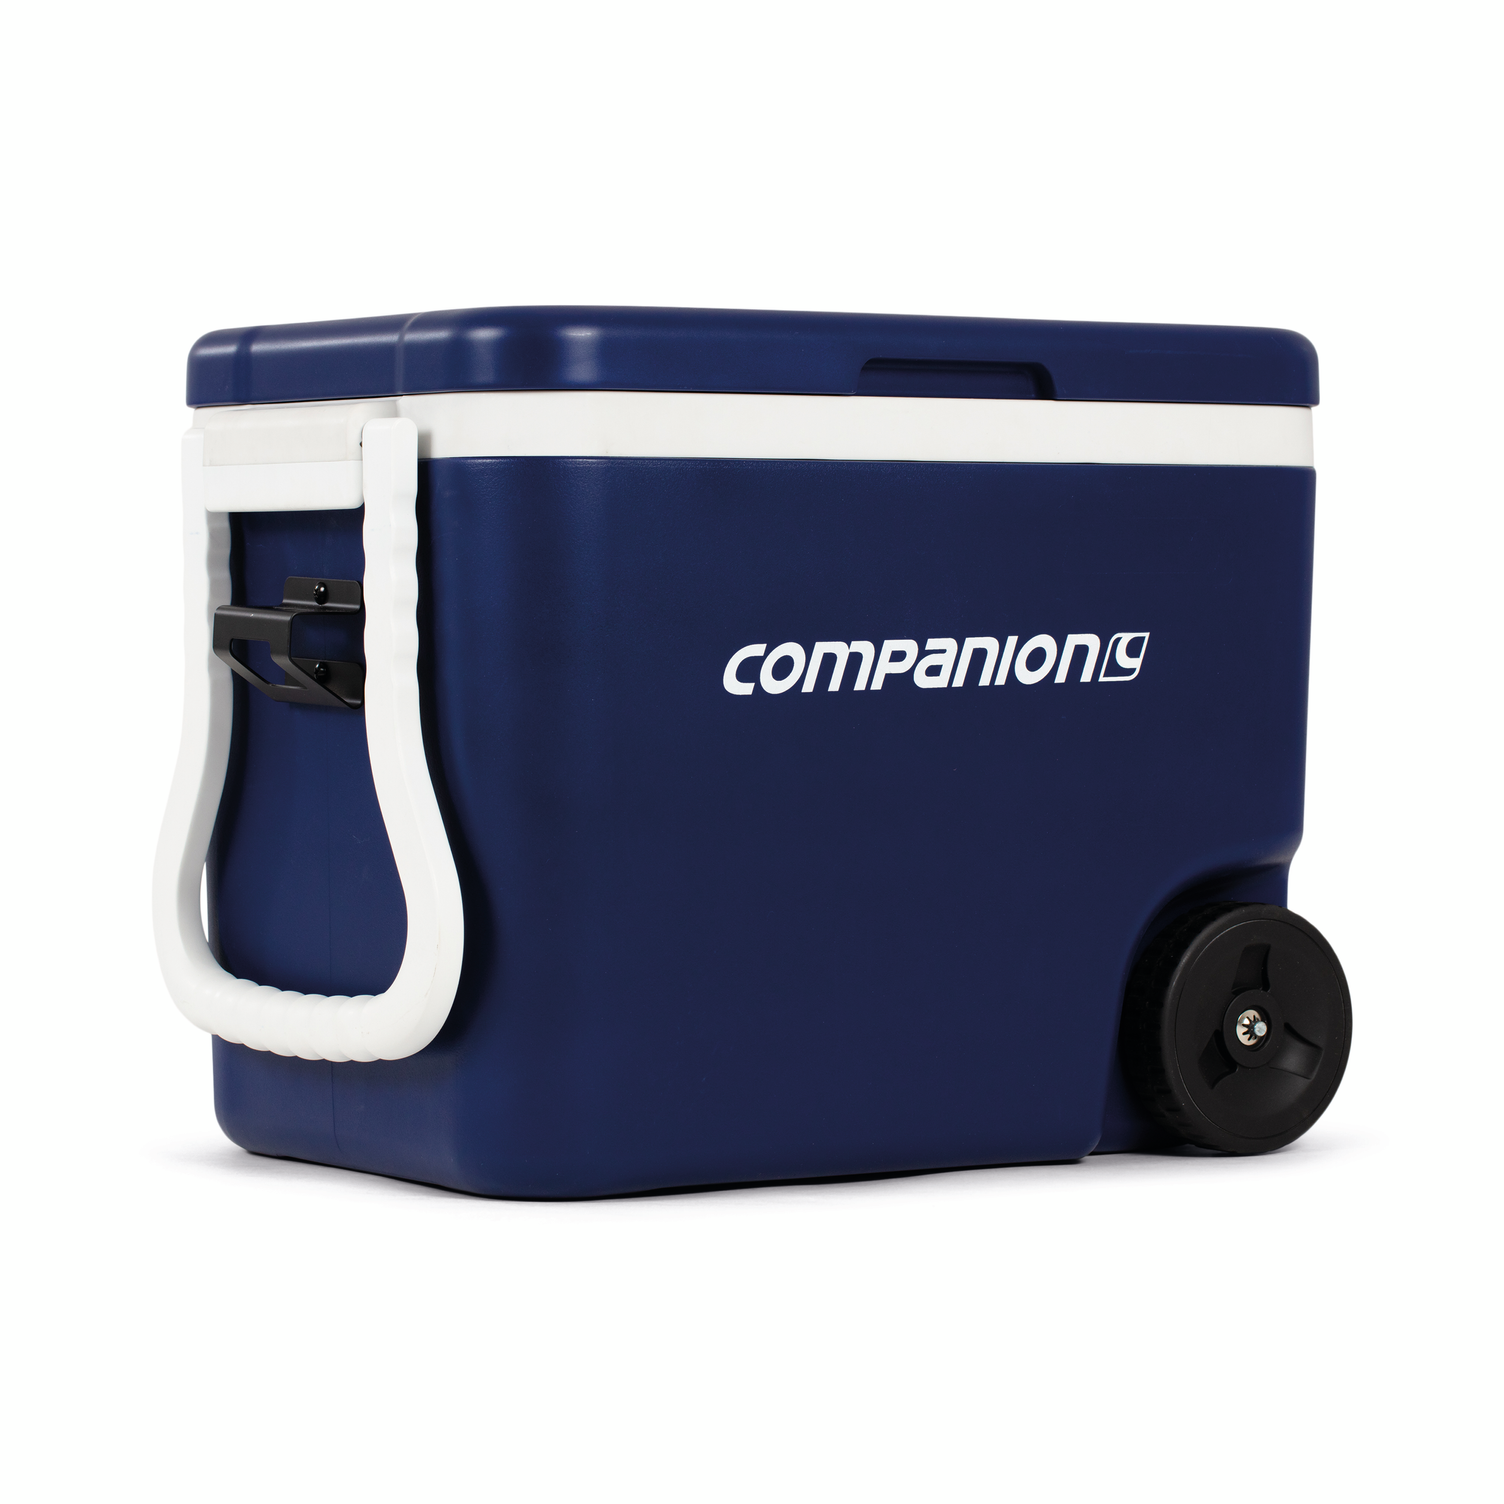 Companion Hard Cooler - 45L